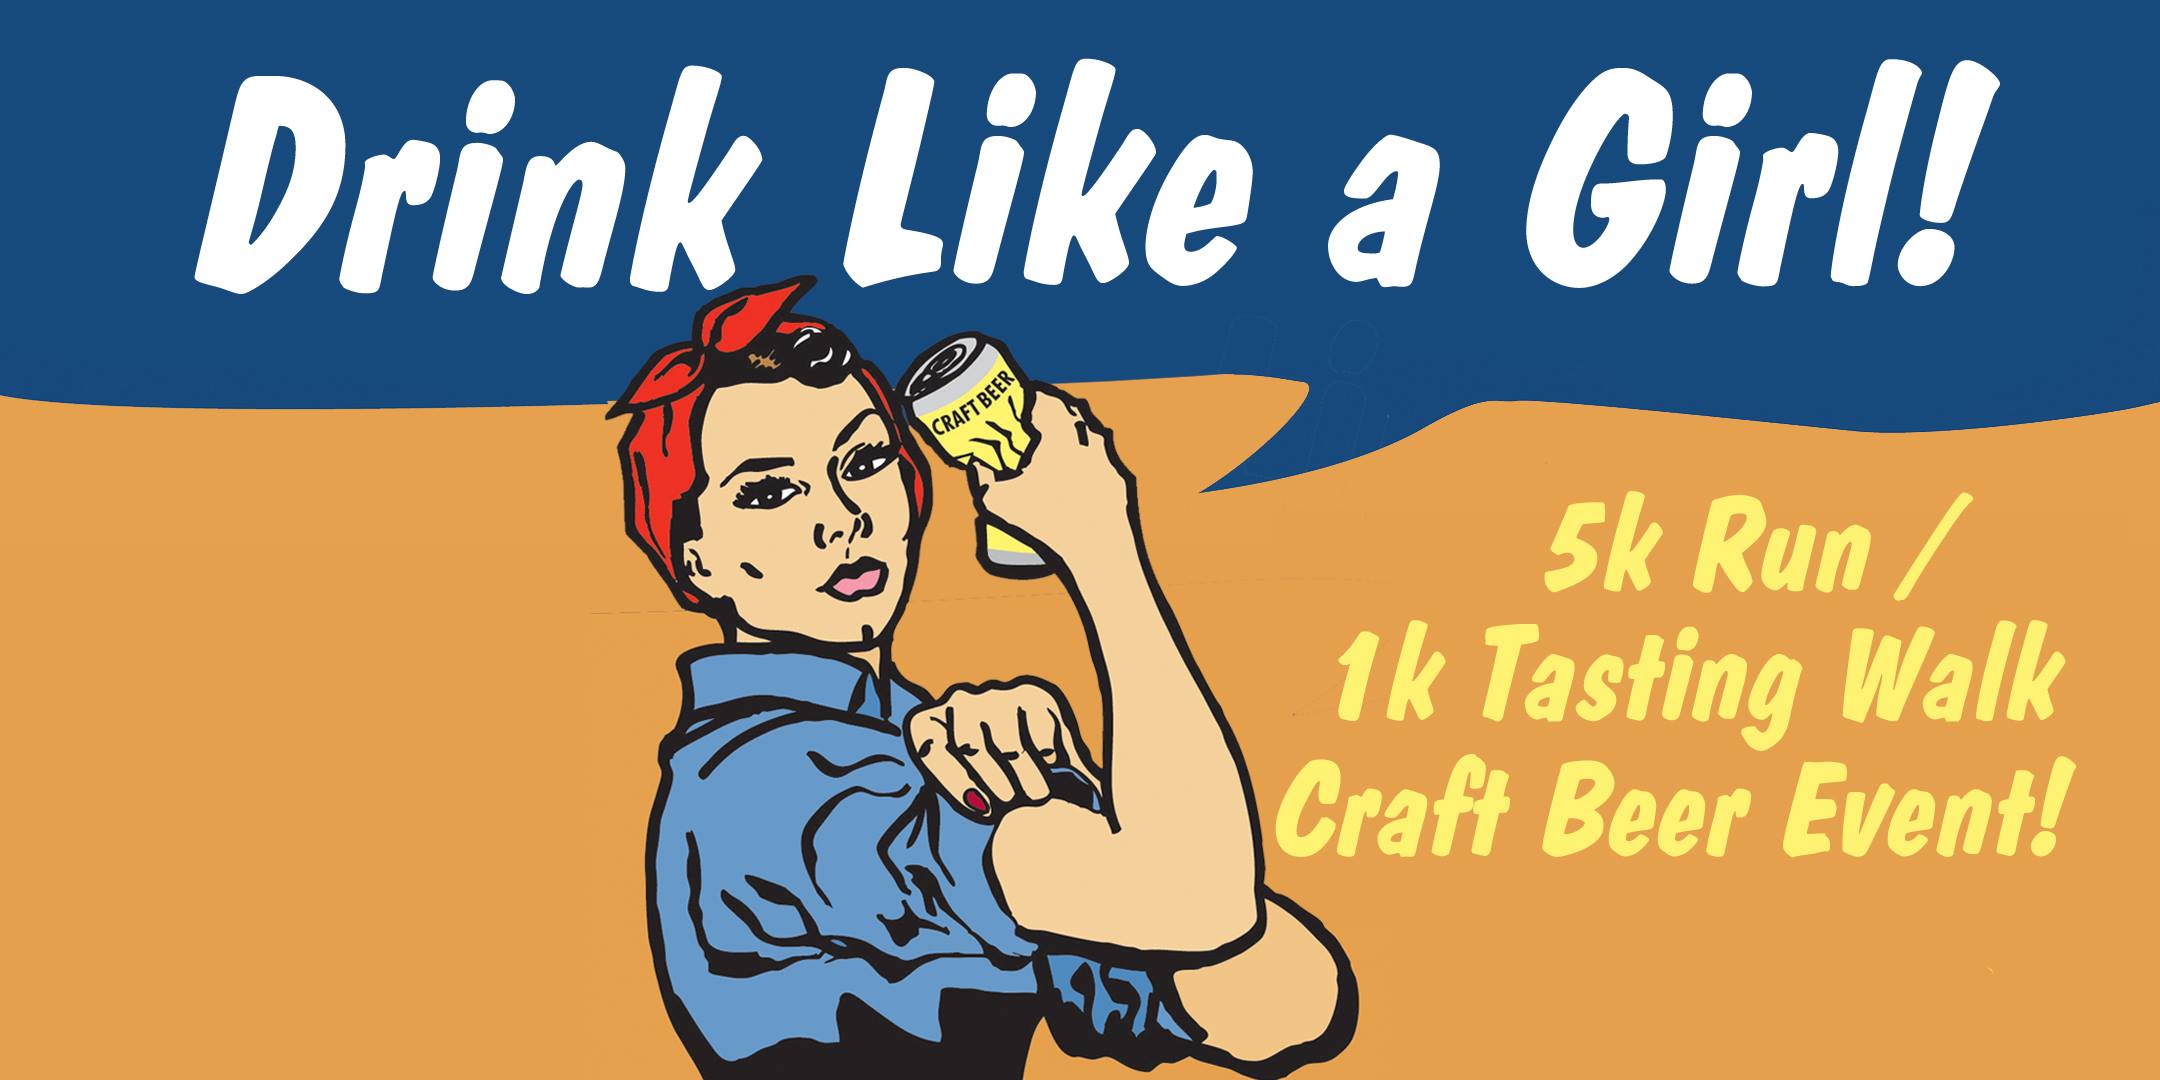 Drink Like a Girl 5k Run/ 1K Craft Beer Tasting Walk